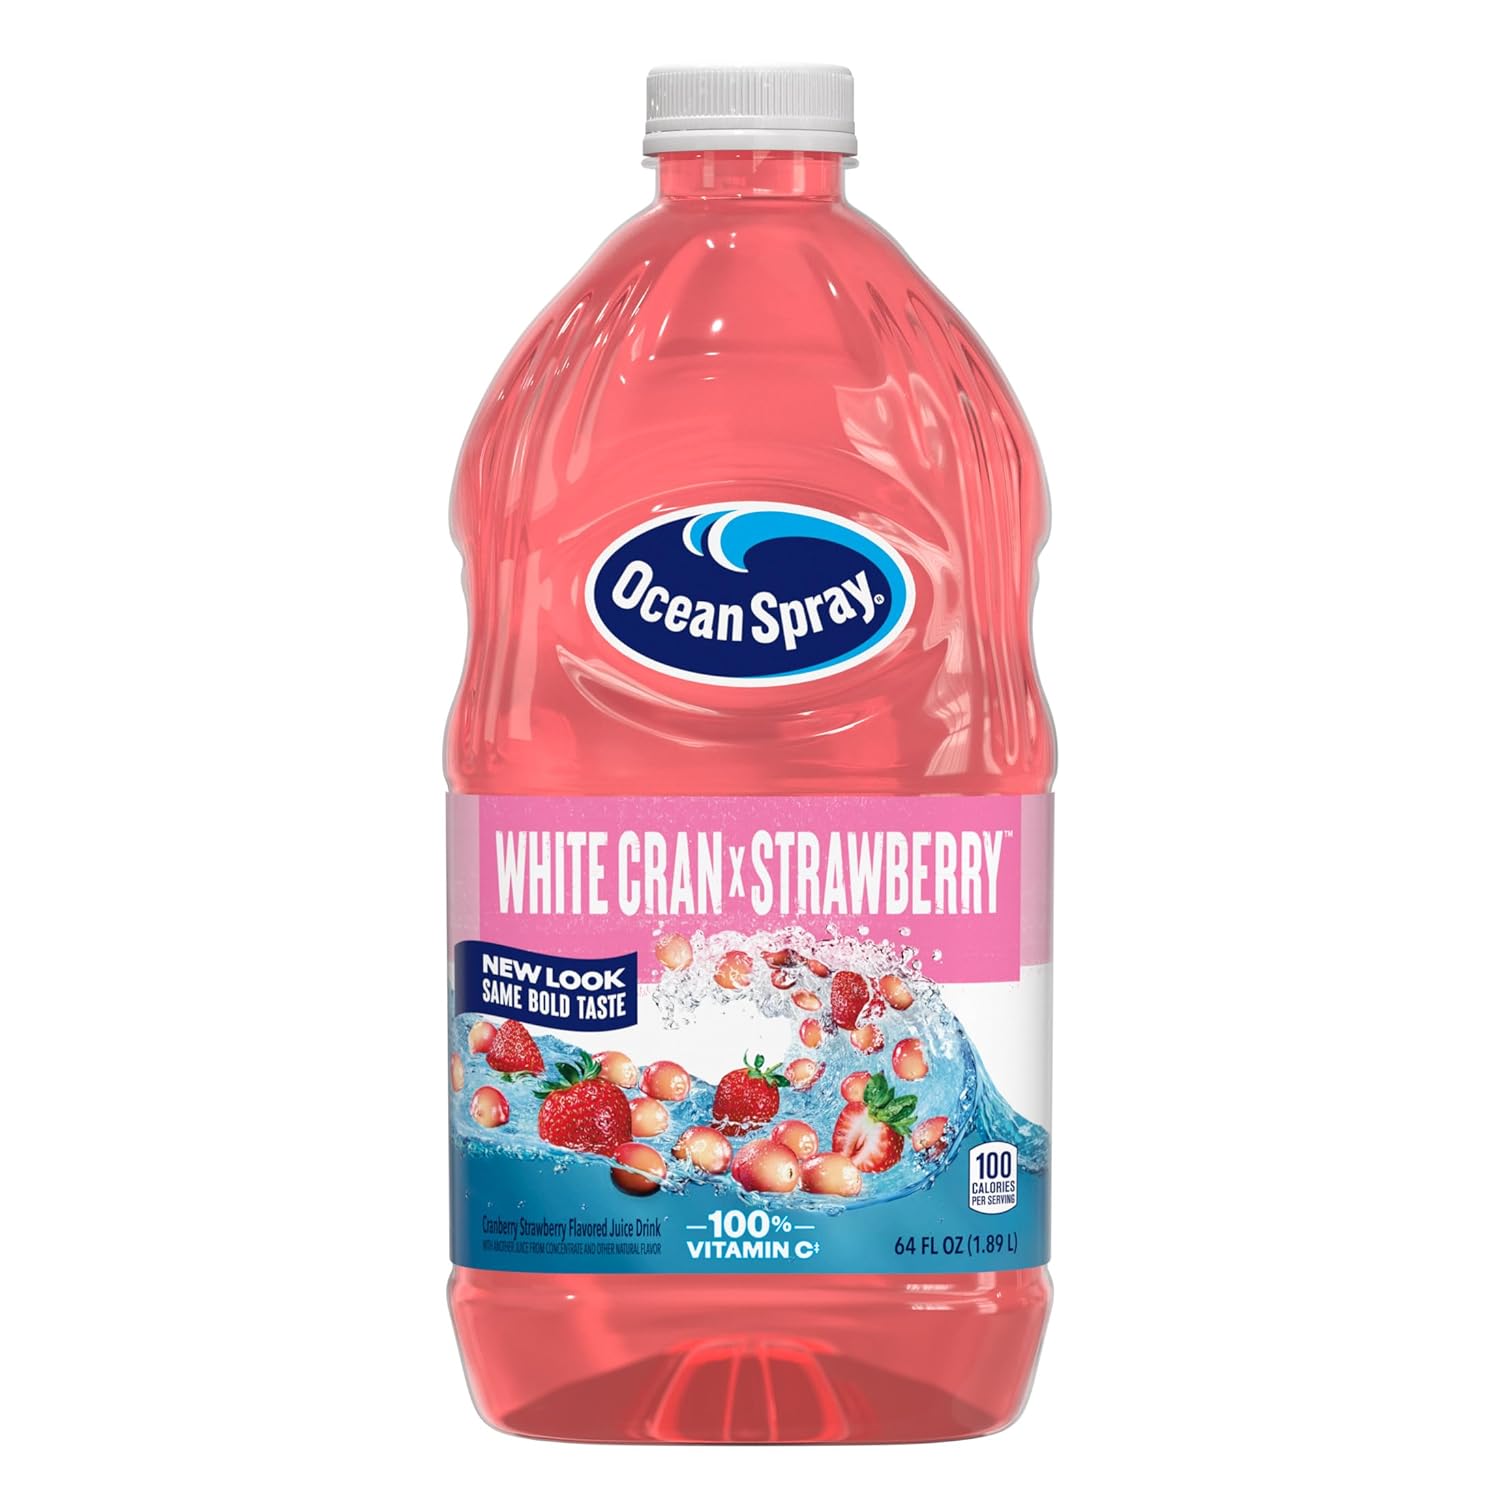 Ocean Spray® White Cran-Strawberry Juice Drink, 64 Fl Oz Bottle (Pack of 1)